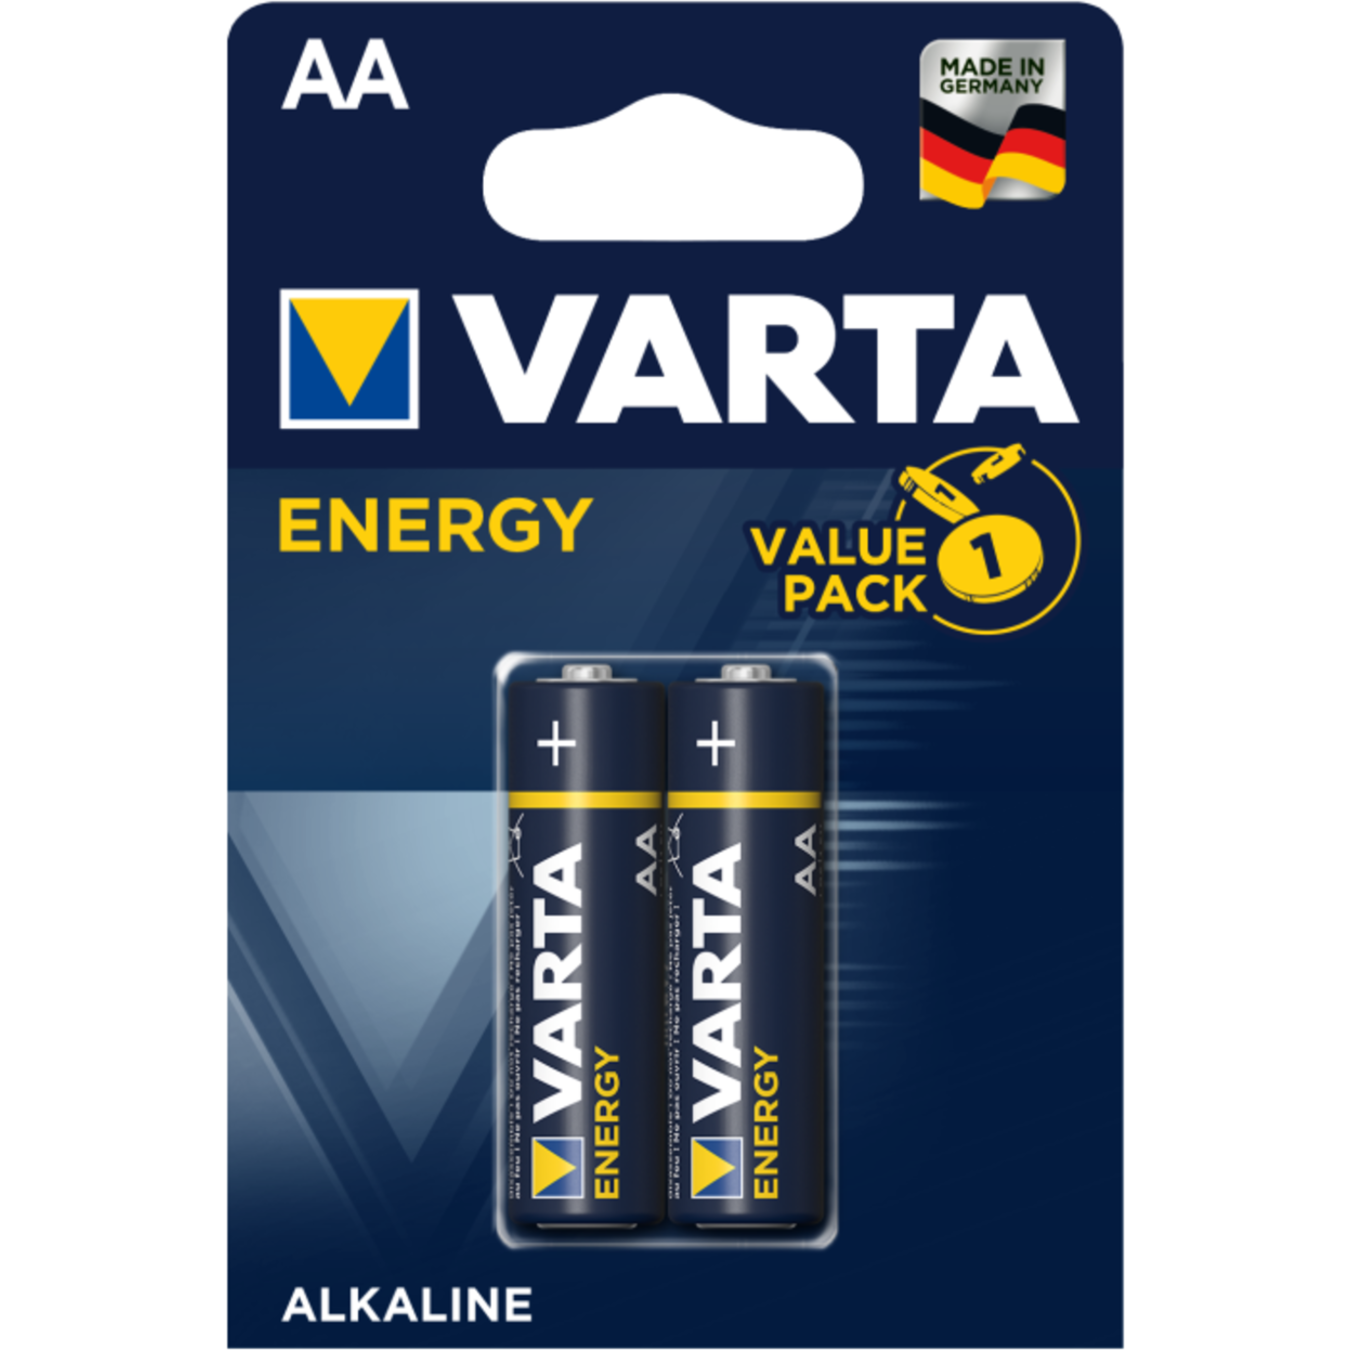 VARTA Energy AA BLI 2 battery 2